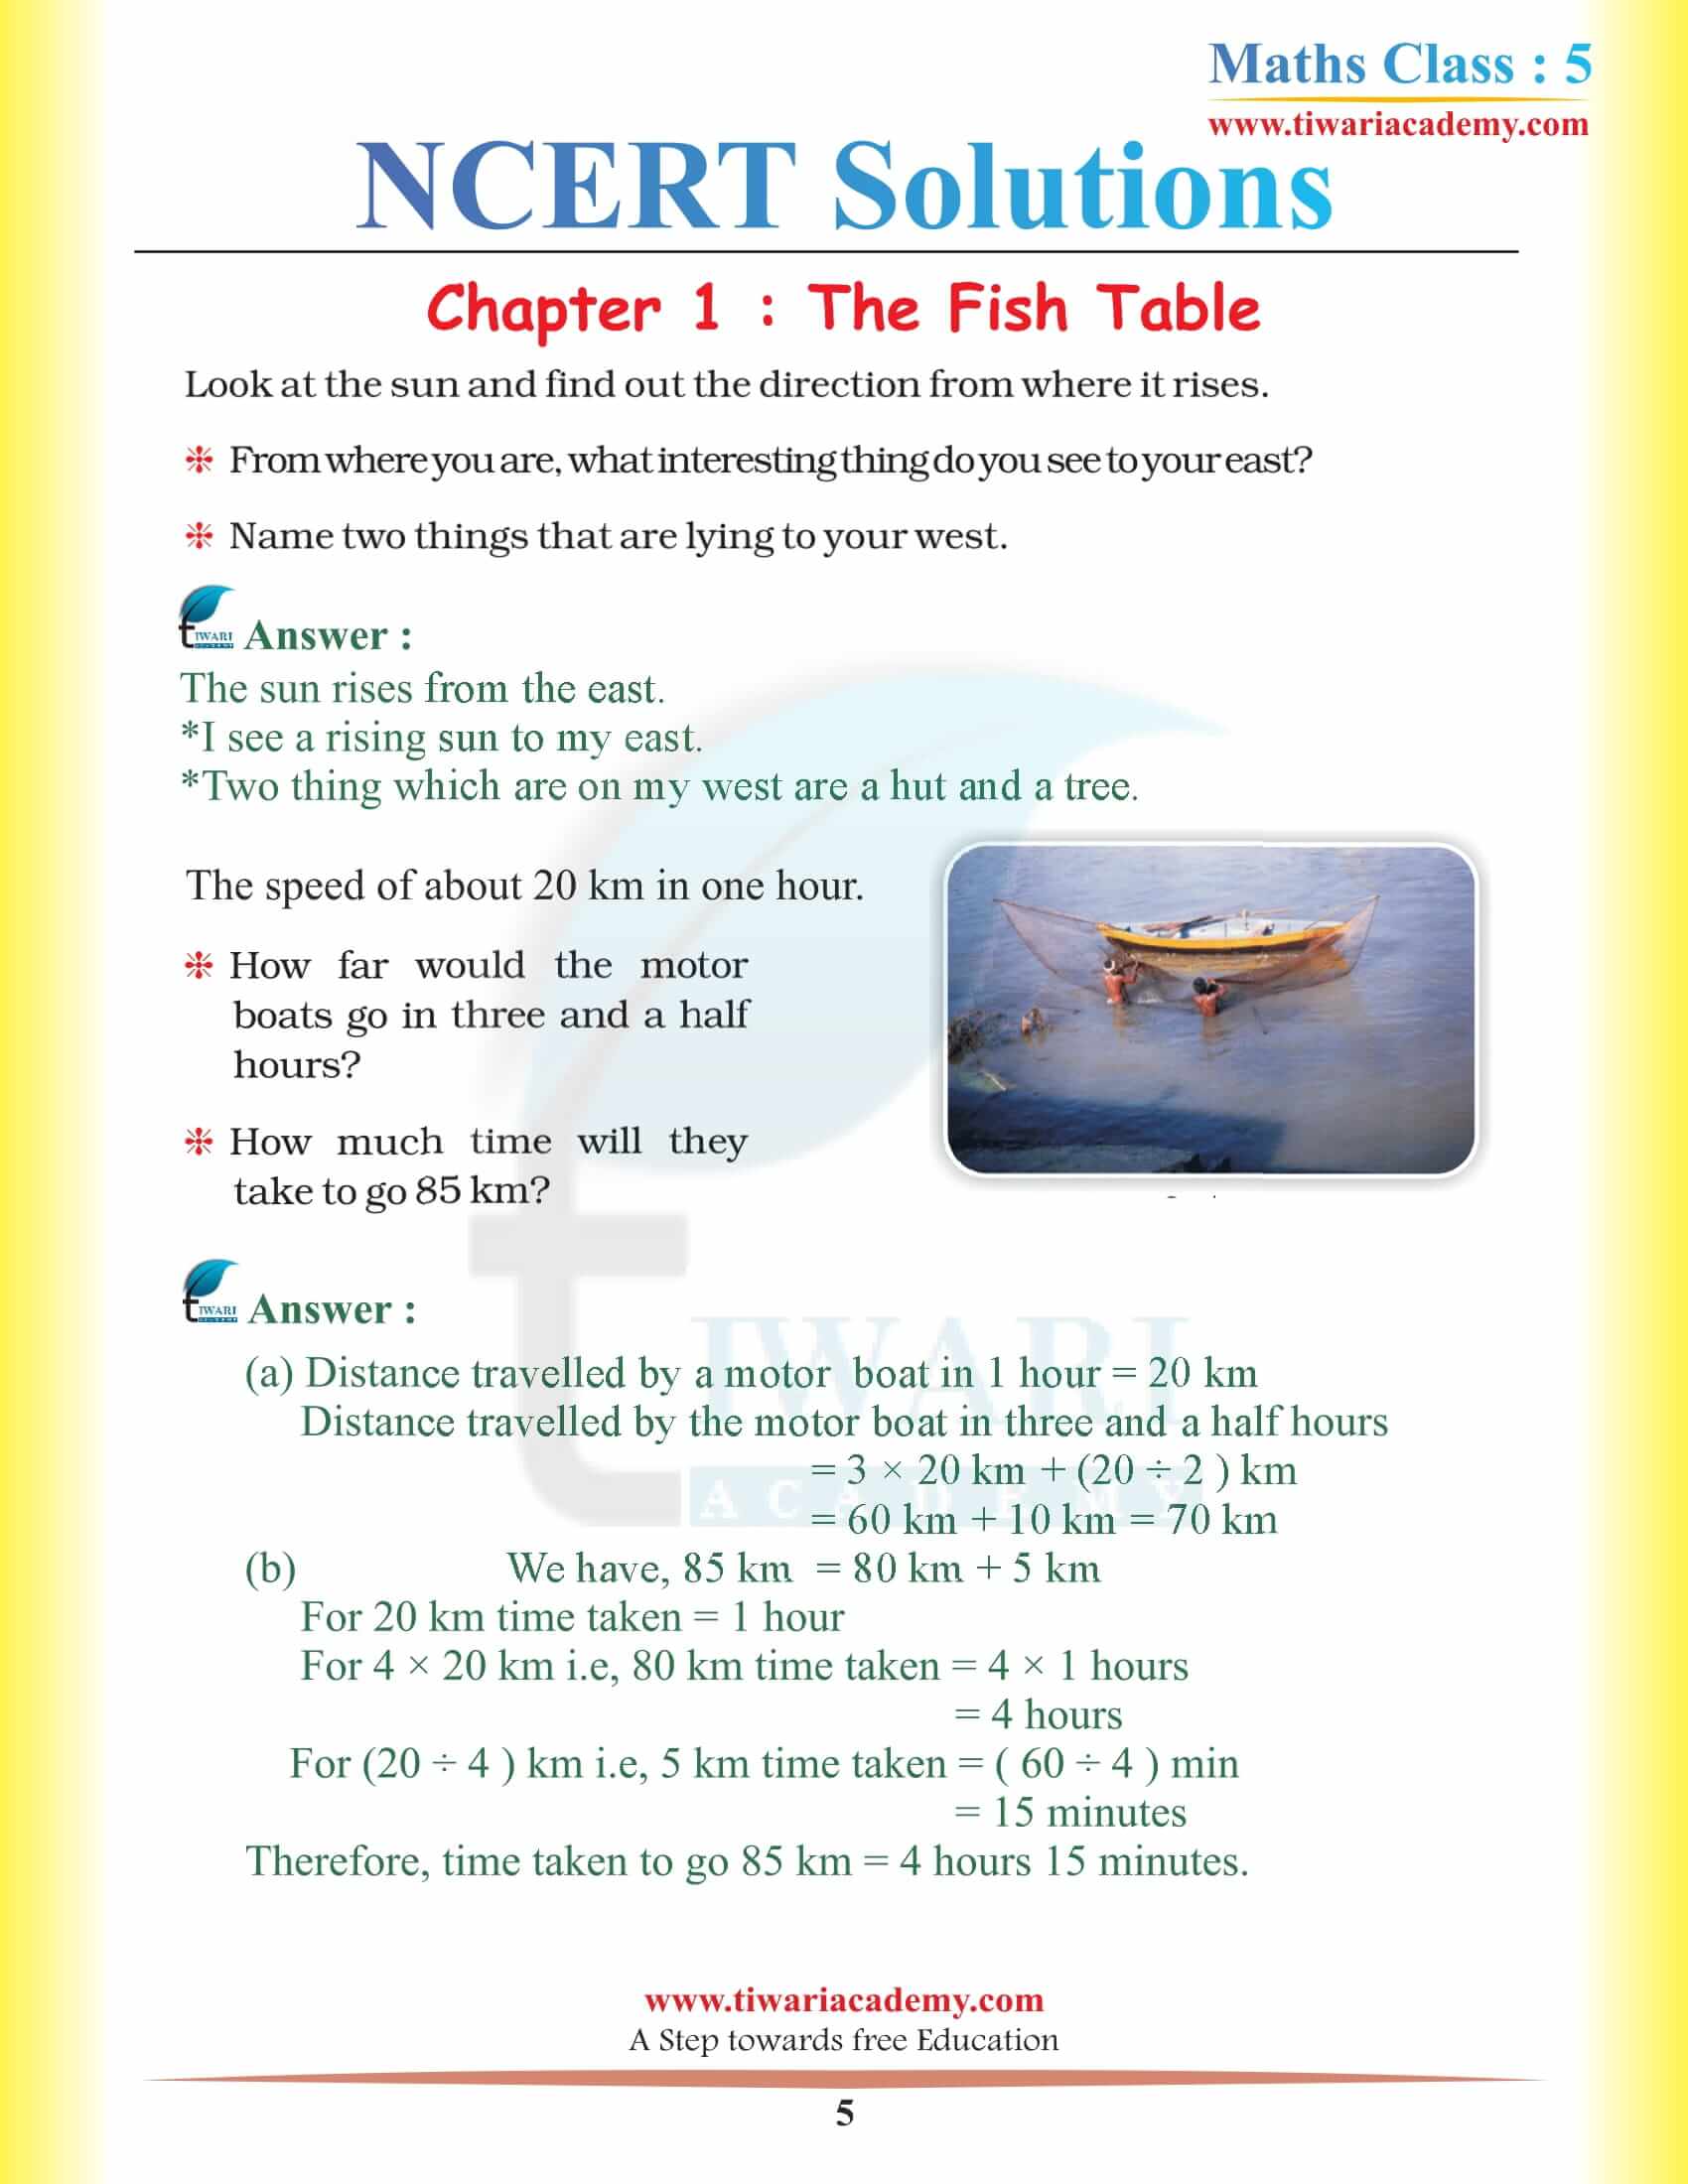 NCERT Solutions for Class 5 Maths Chapter 1 updated